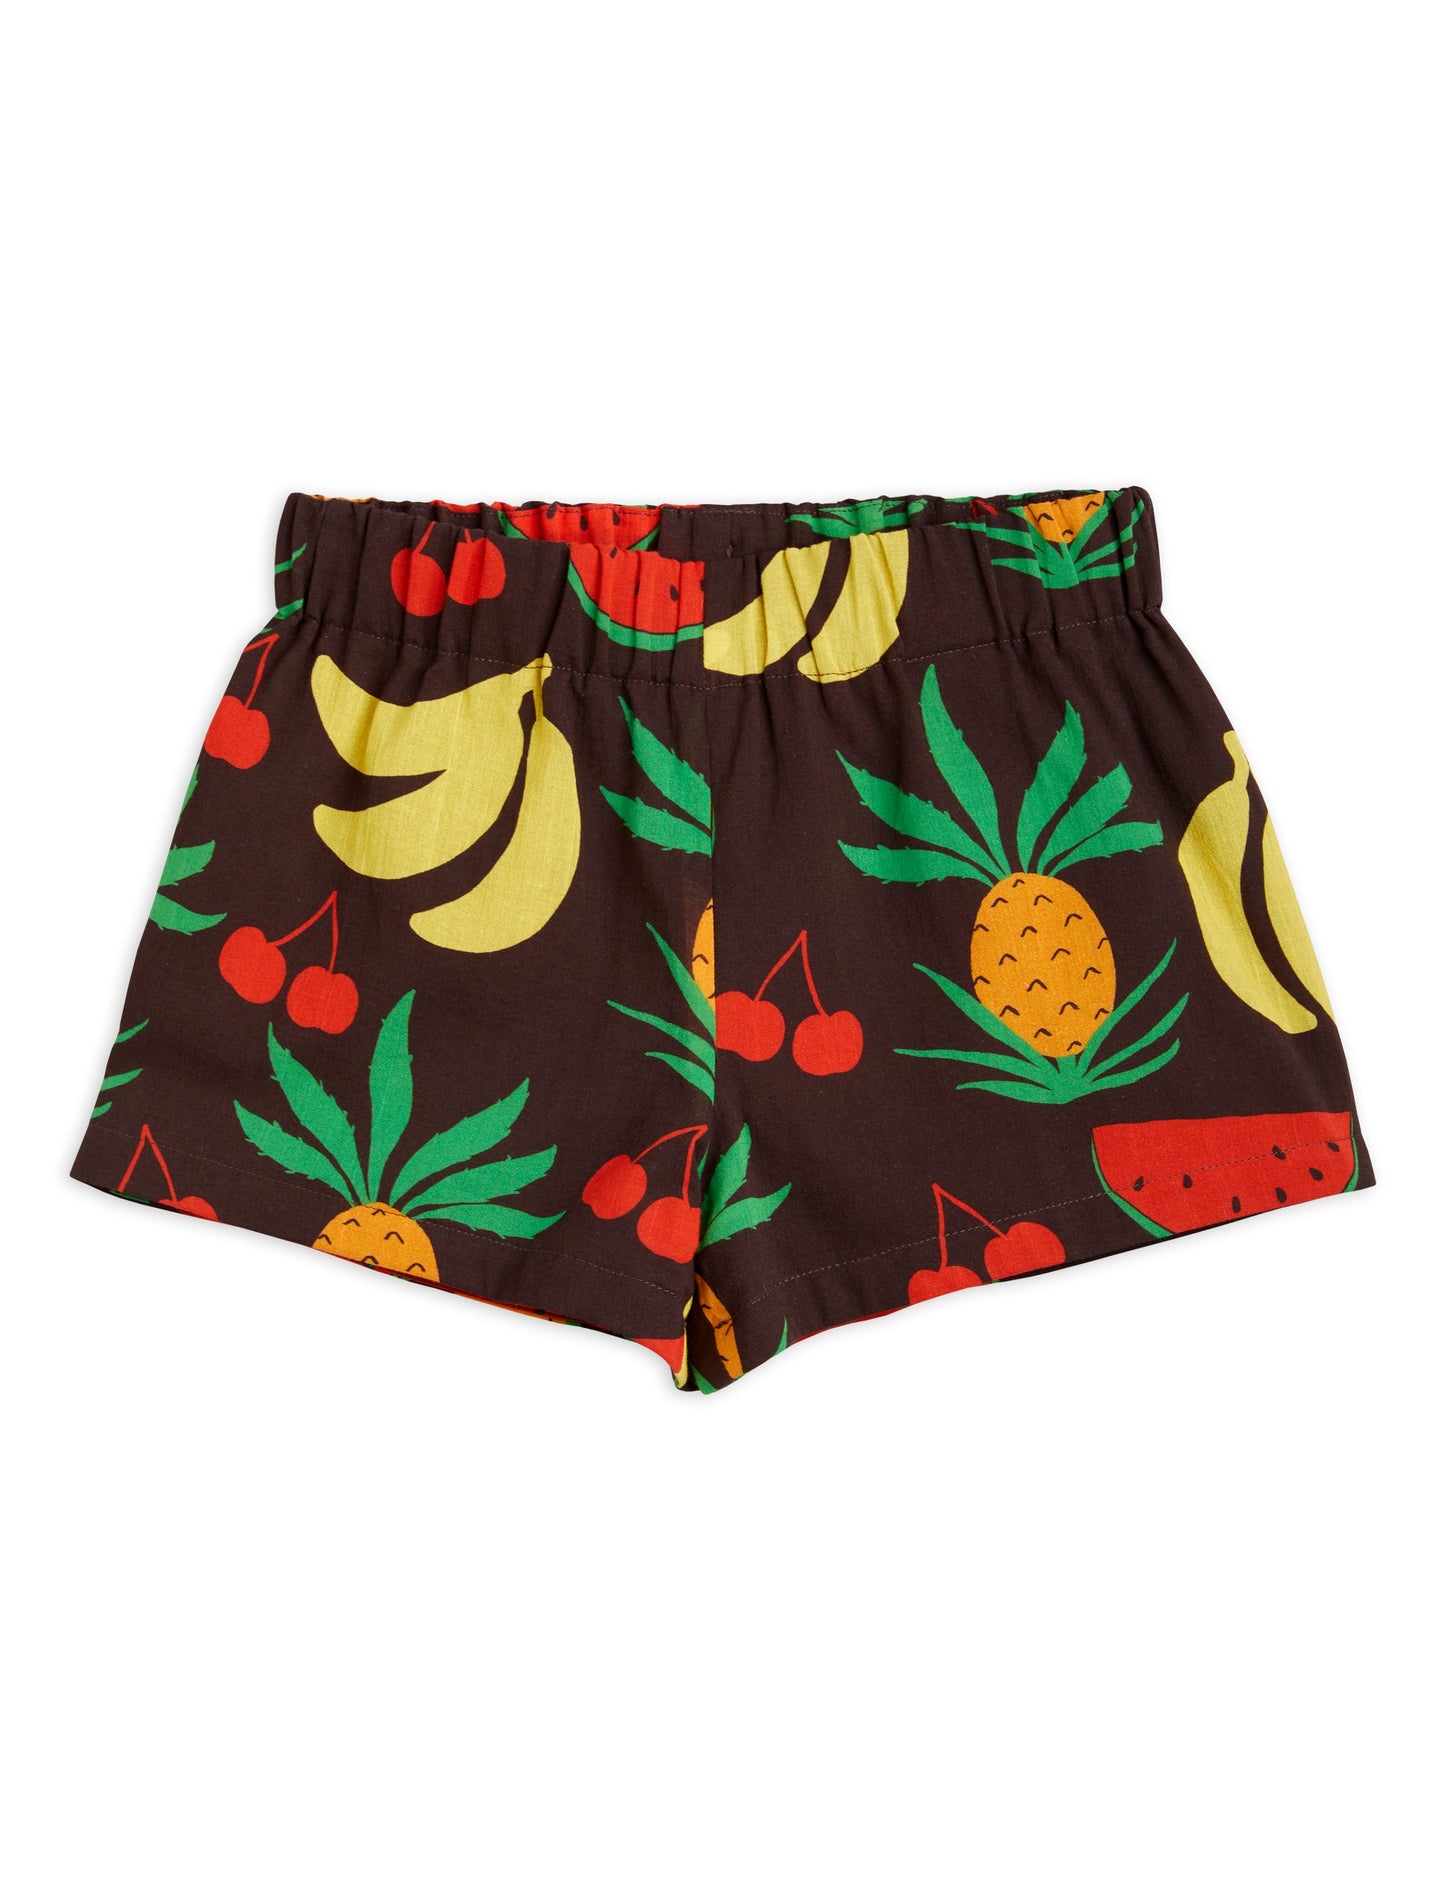 Fruits woven shorts